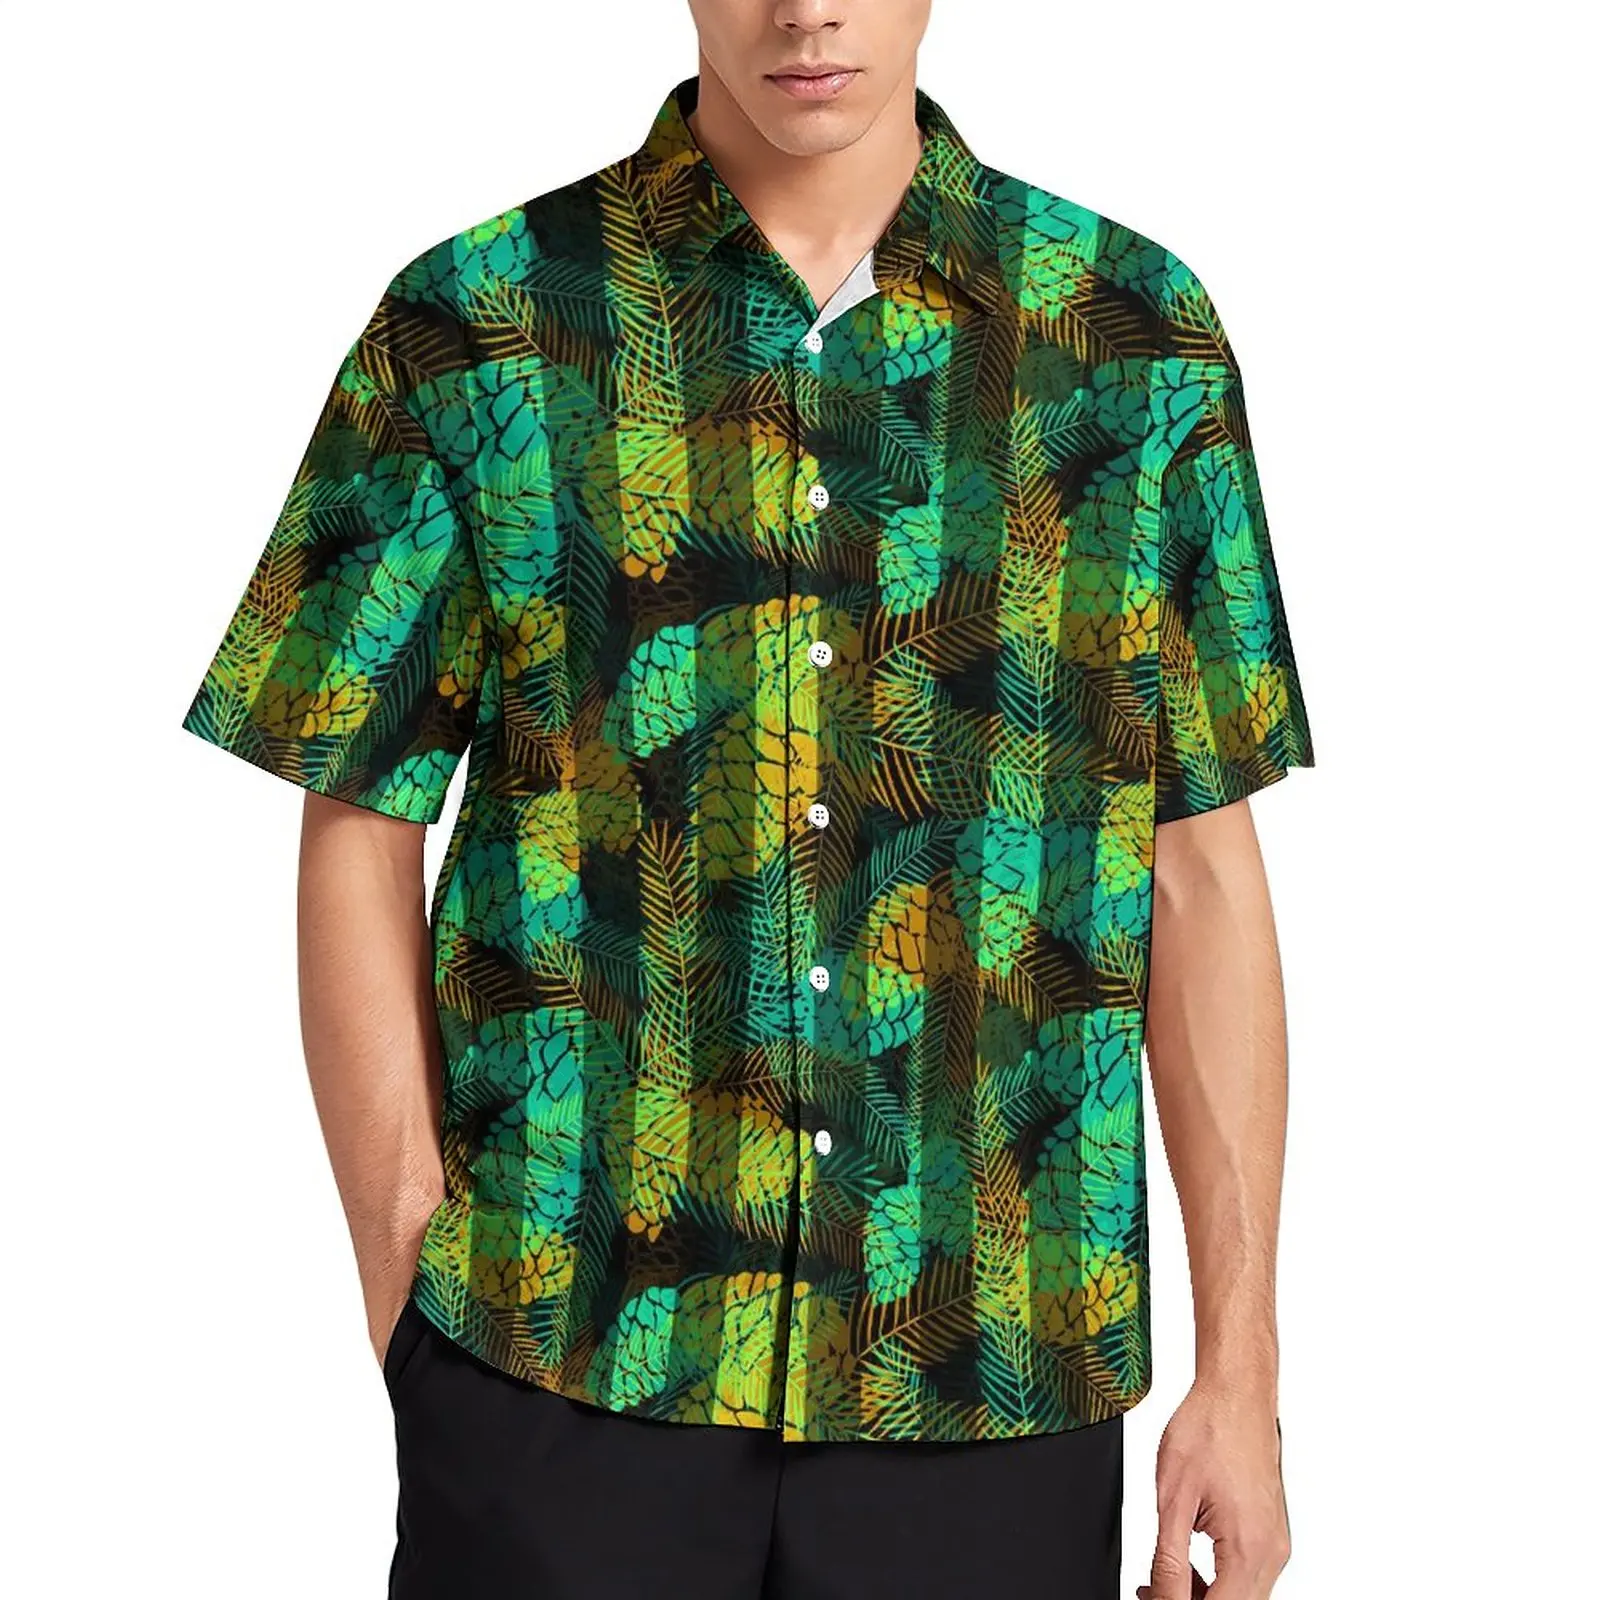 

Green Pine Cones Blouses Man Stripes Print Casual Shirts Hawaiian Short-Sleeved Printed Cool Oversized Vacation Shirt Gift Idea